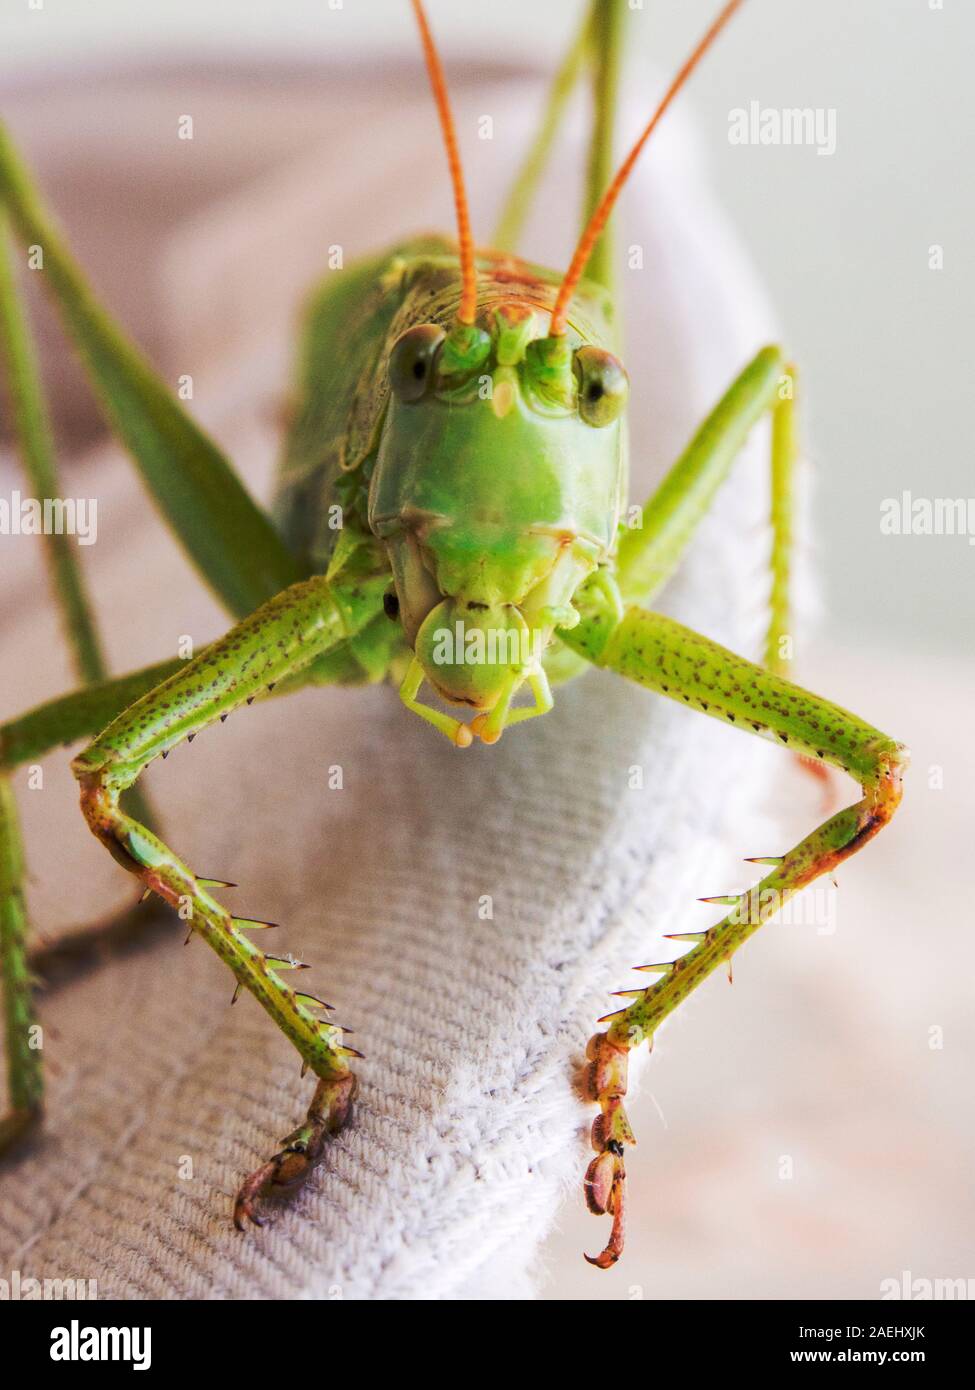 A closeup of a grasshopper. Stock Photo